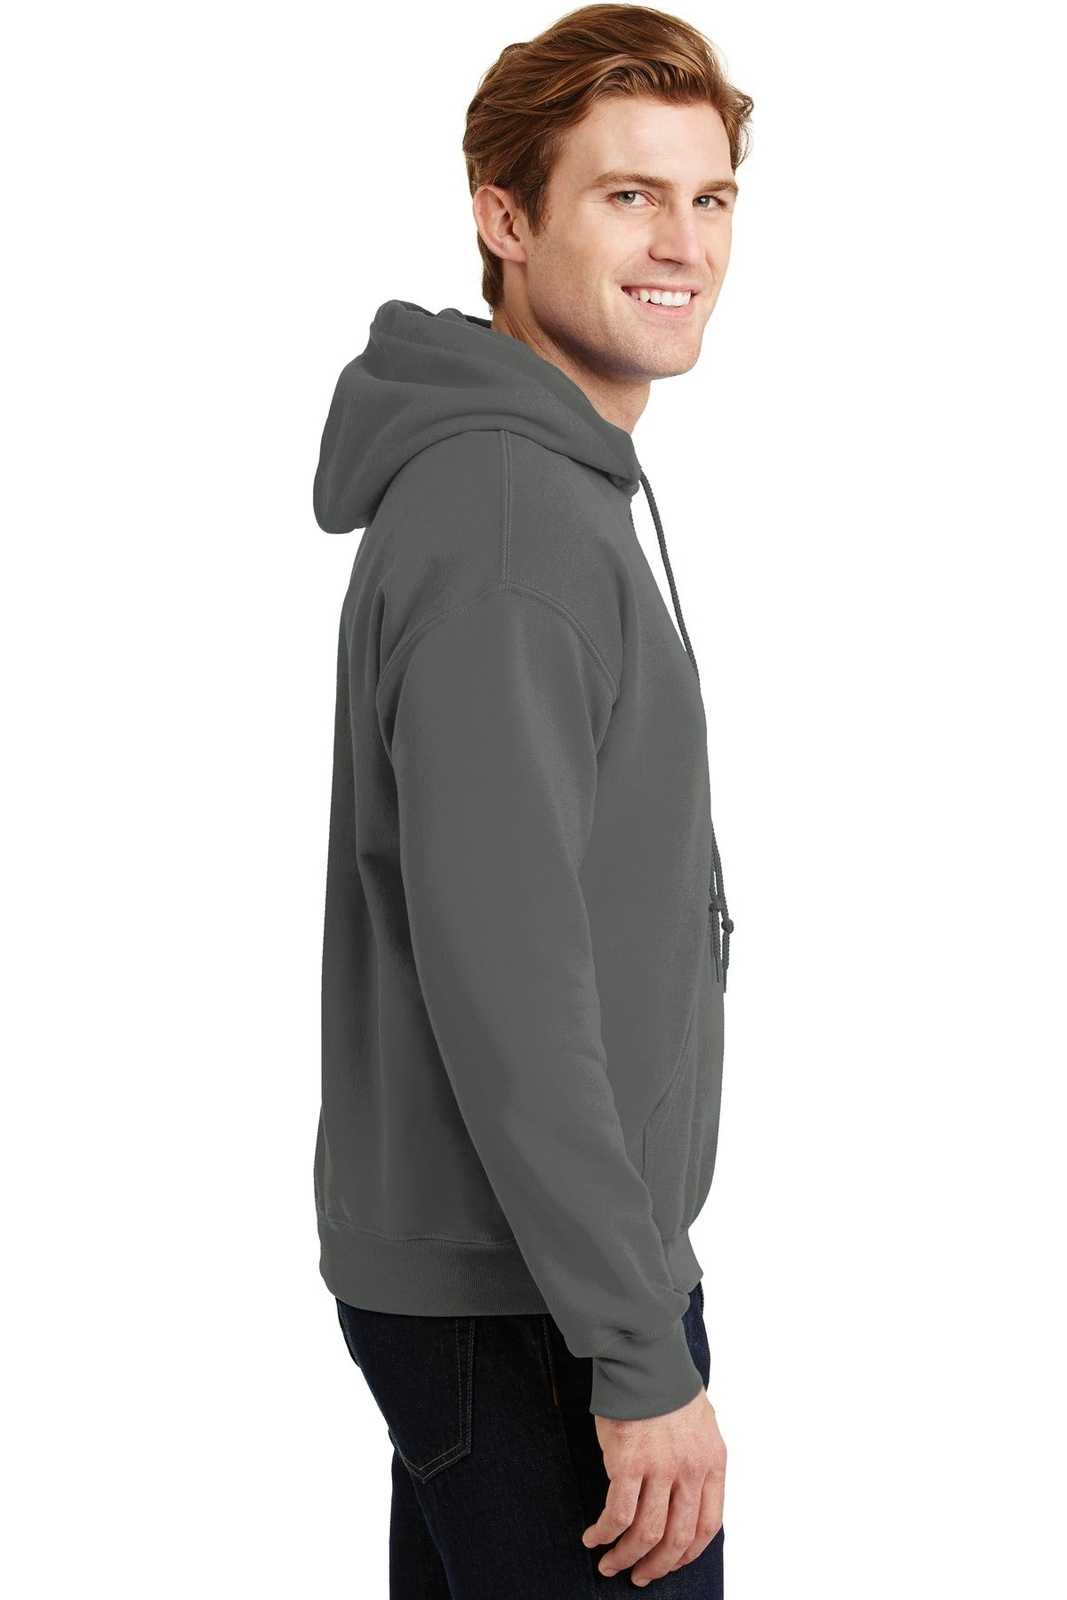 Gildan 18500 Heavy Blend Hooded Sweatshirt - Charcoal - HIT a Double